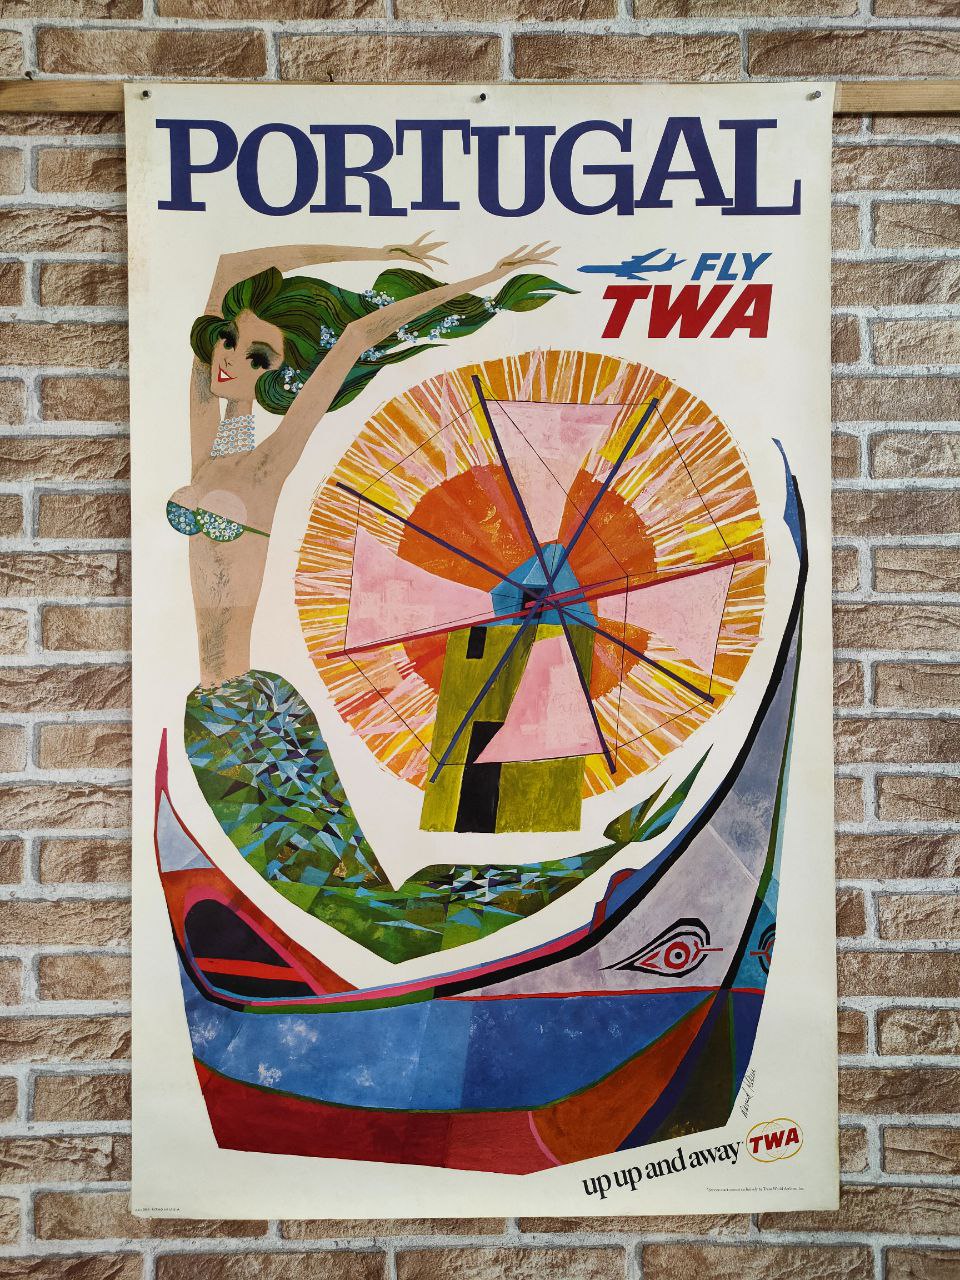 Manifesto originale pubblicitario - TWA Portugal